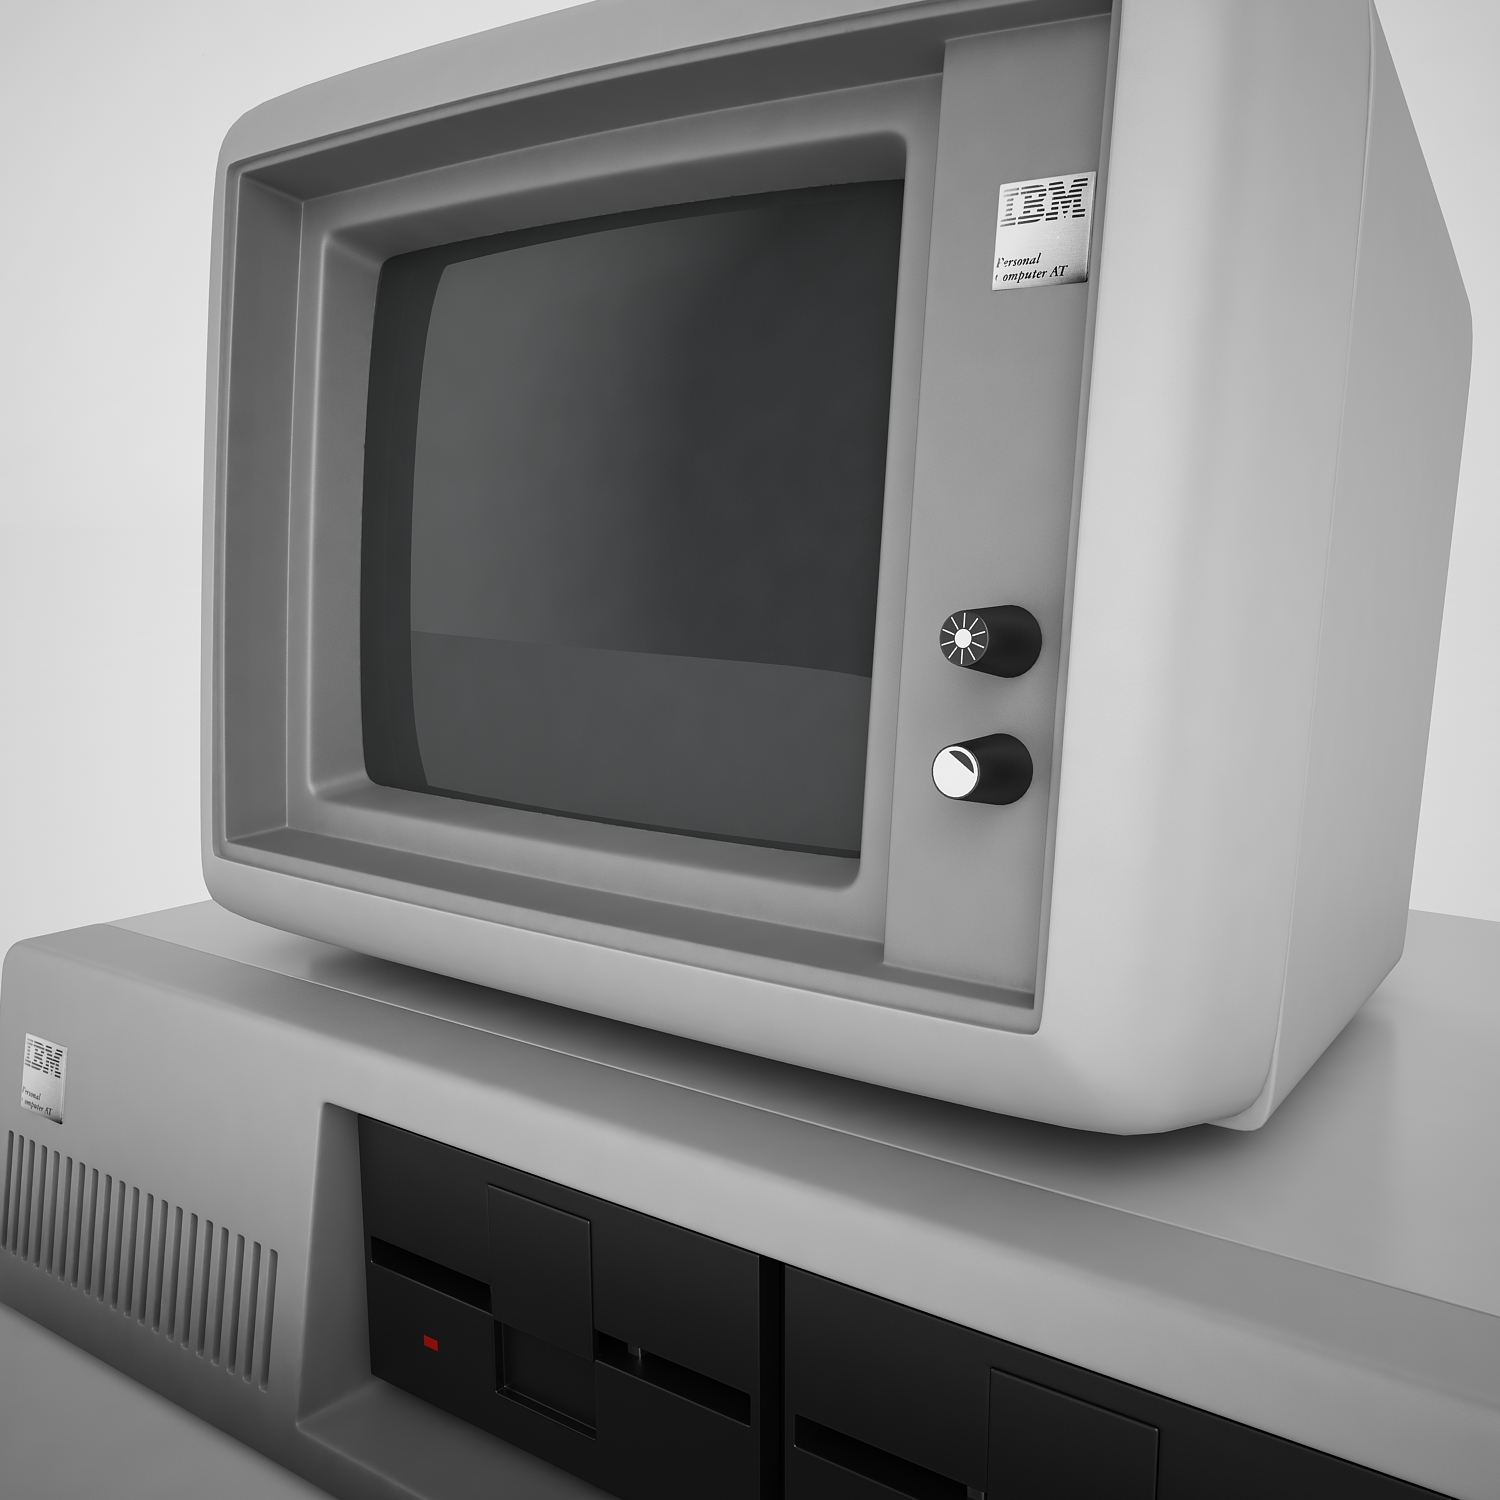 IBM PC XT Retro 01